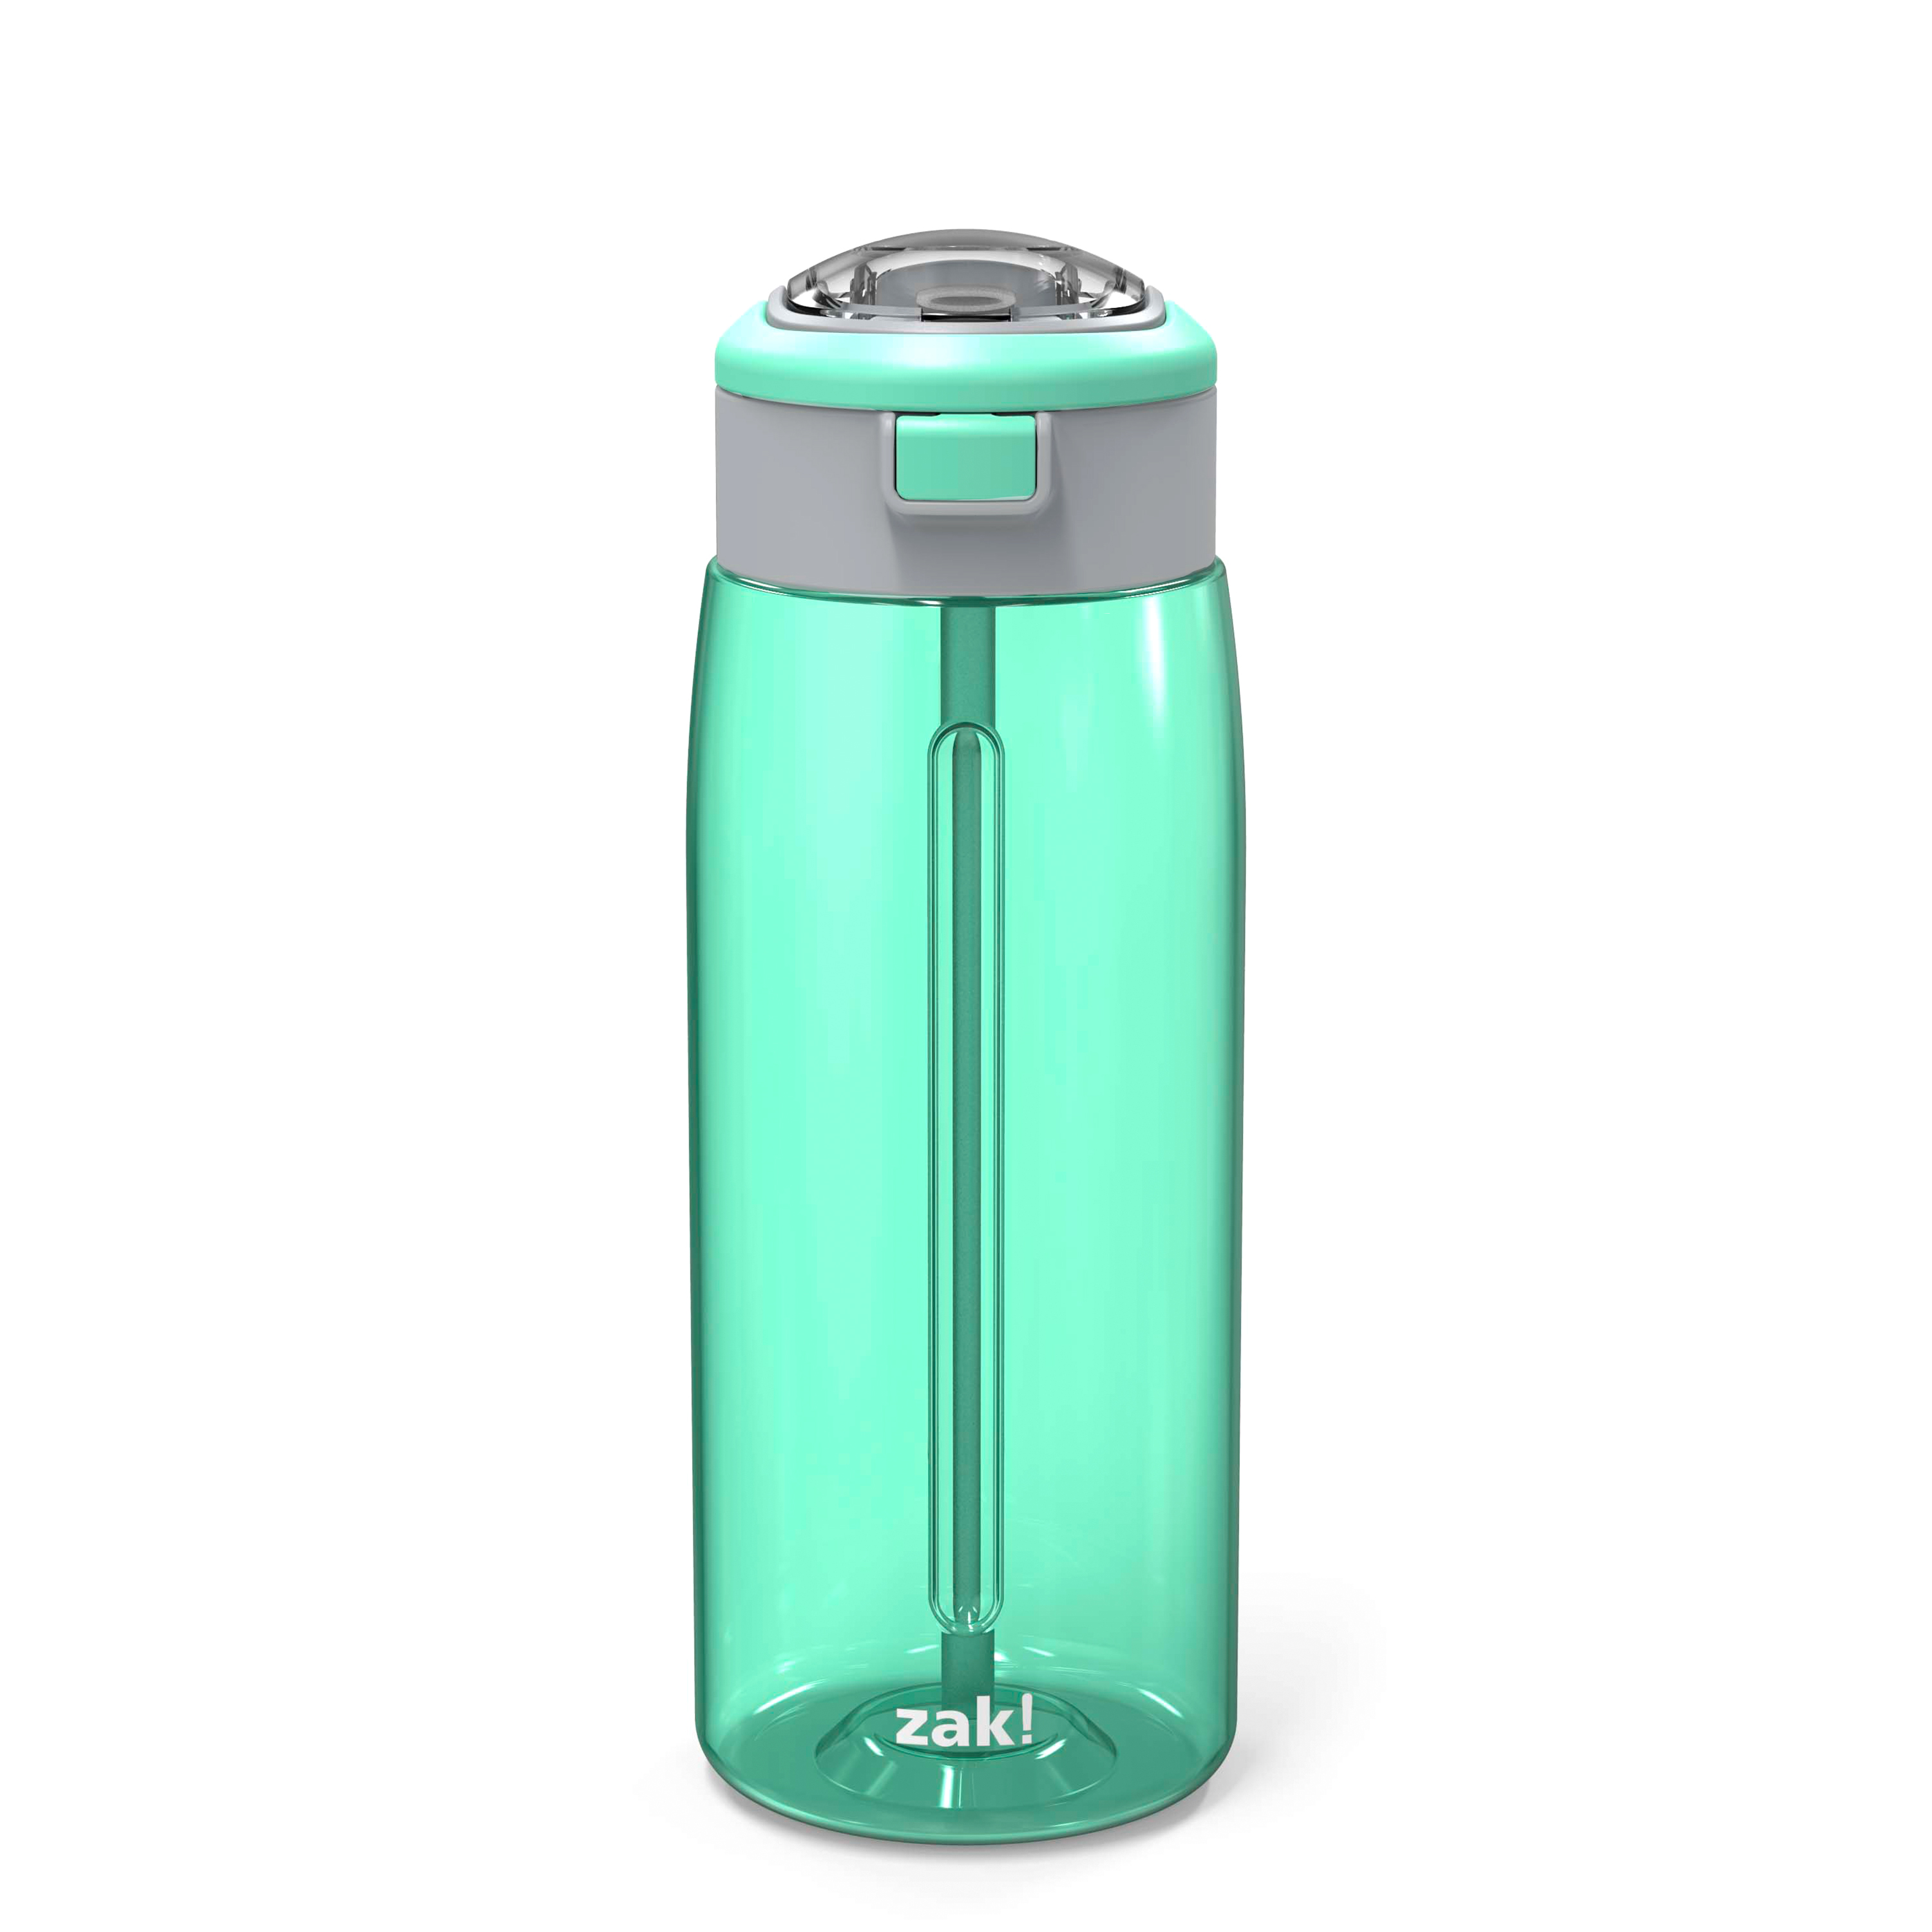 Genesis 32 ounce Reusable Plastic Water Bottle with Interchangeable Spouts, Neo Mint slideshow image 1